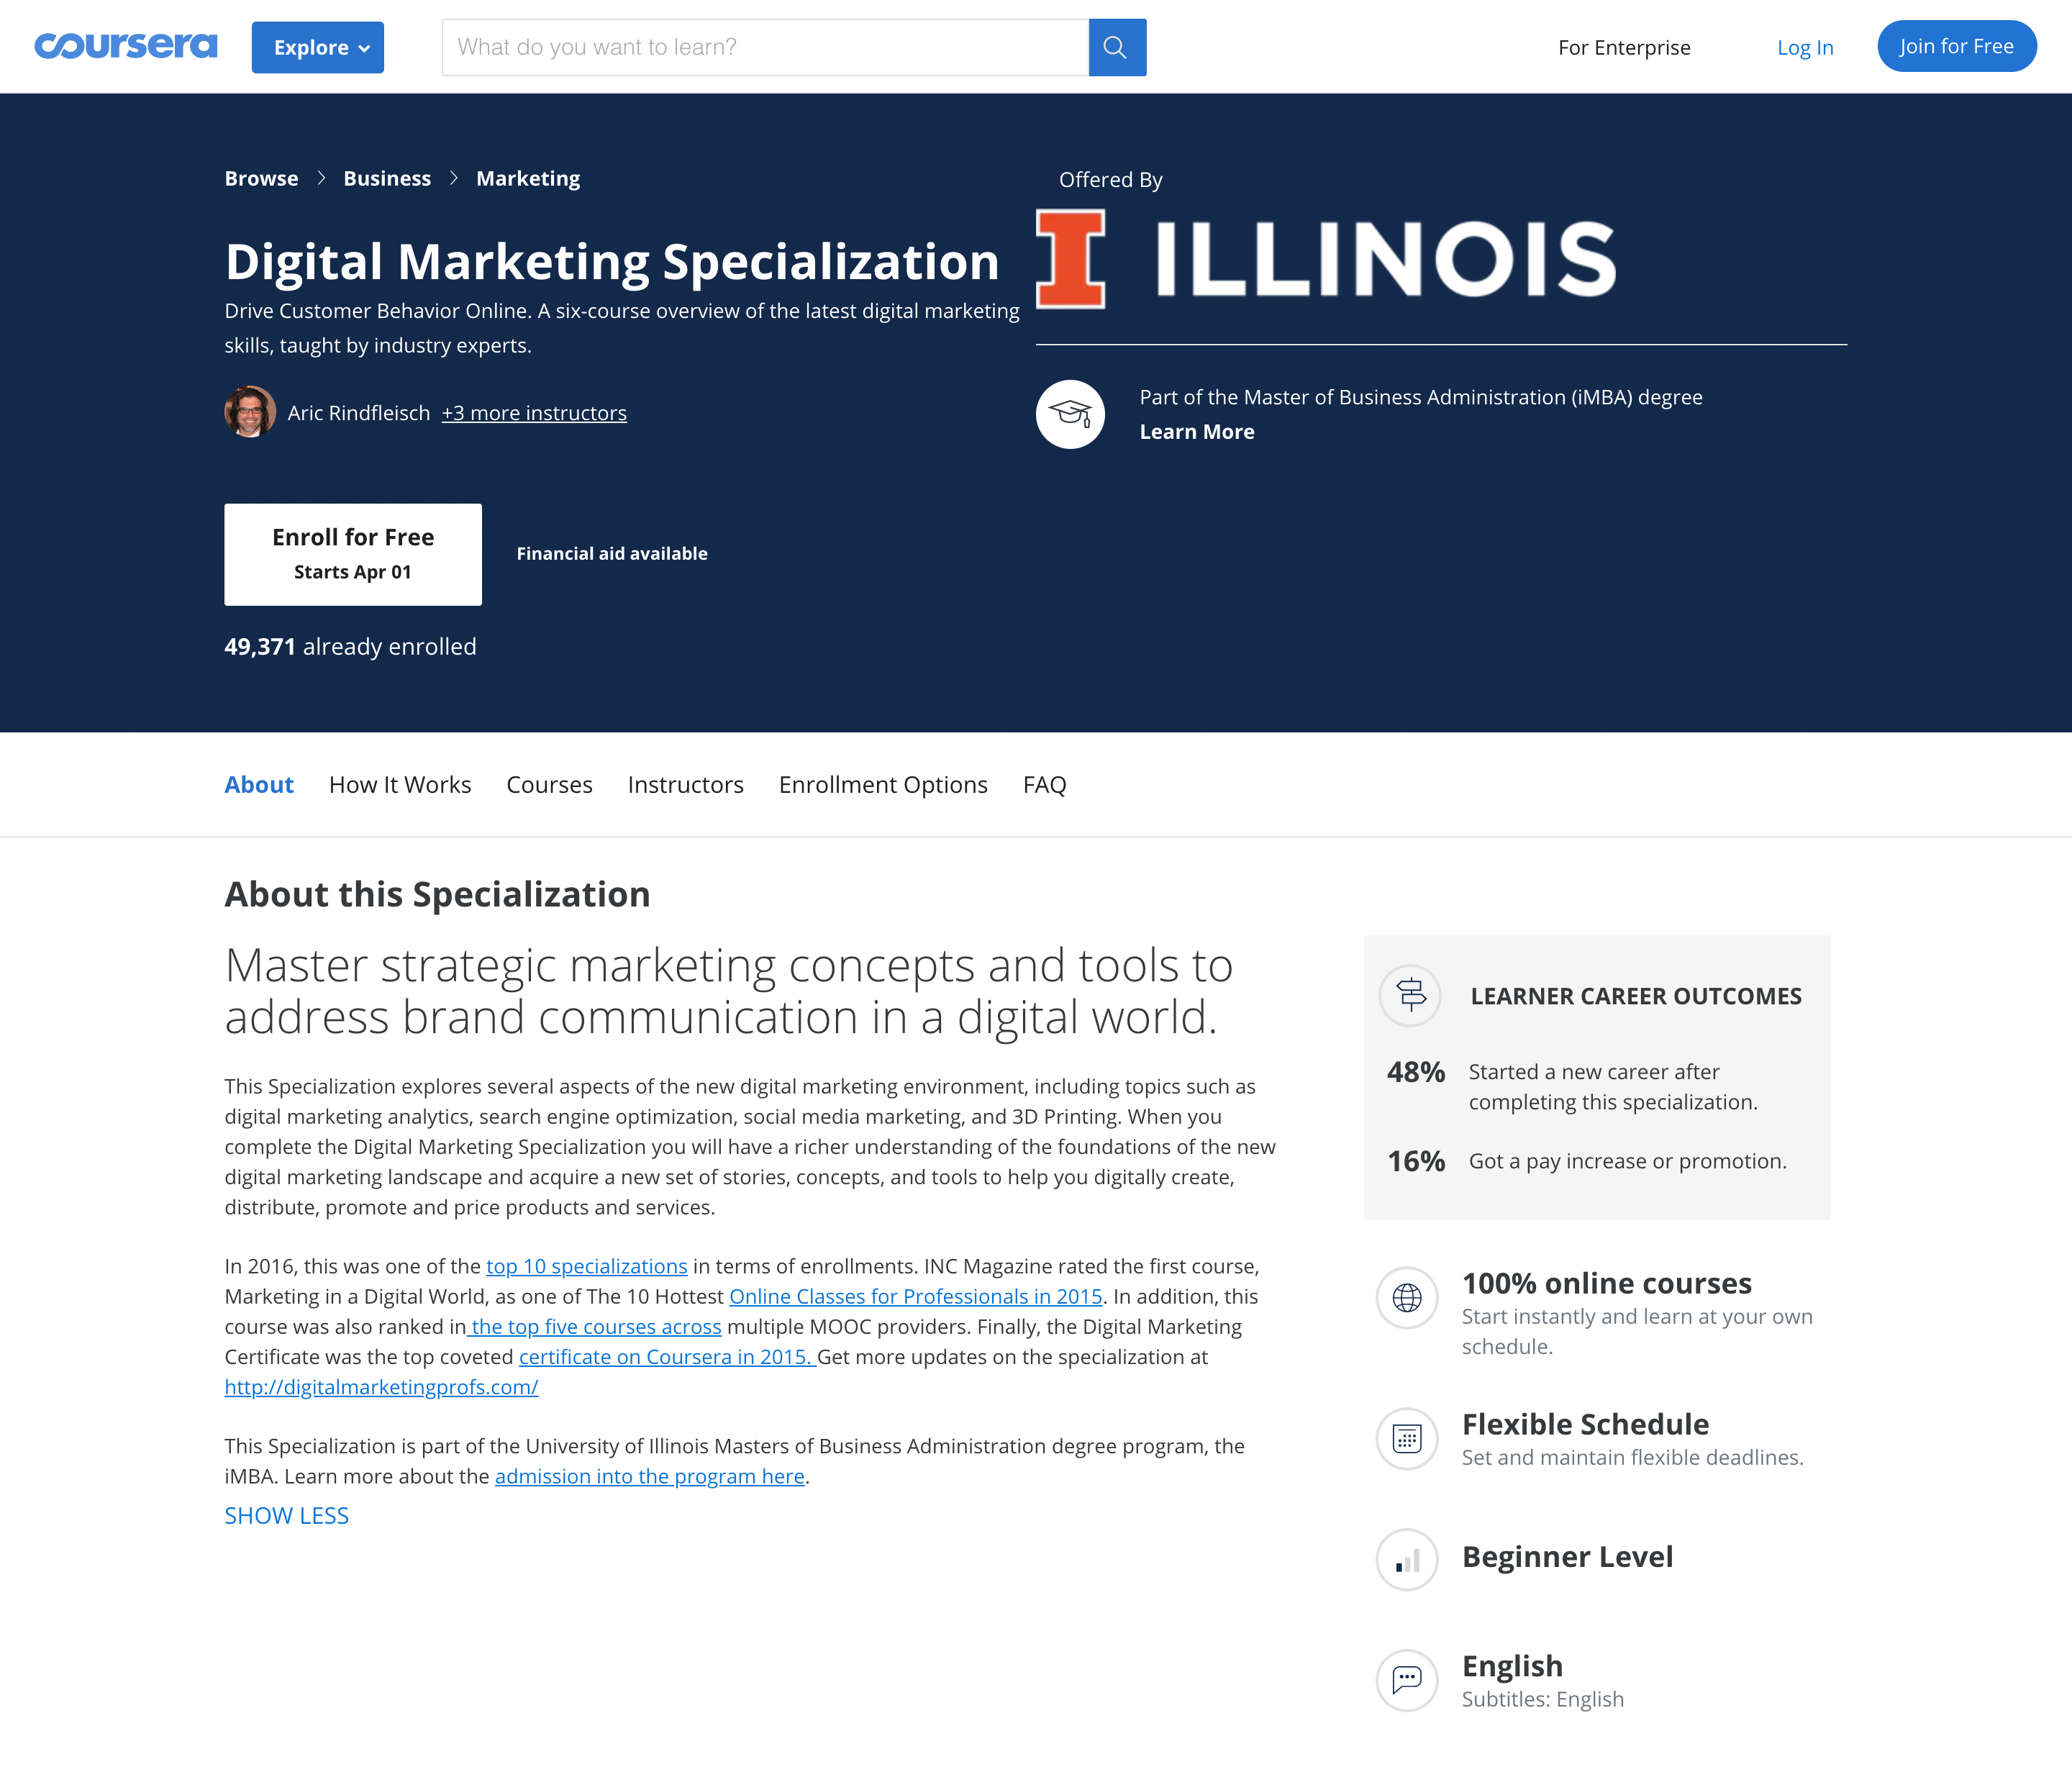 Coronavirus Lockdown Guide Online Classes Digital Marketing Specialization Certification by University of Illinois